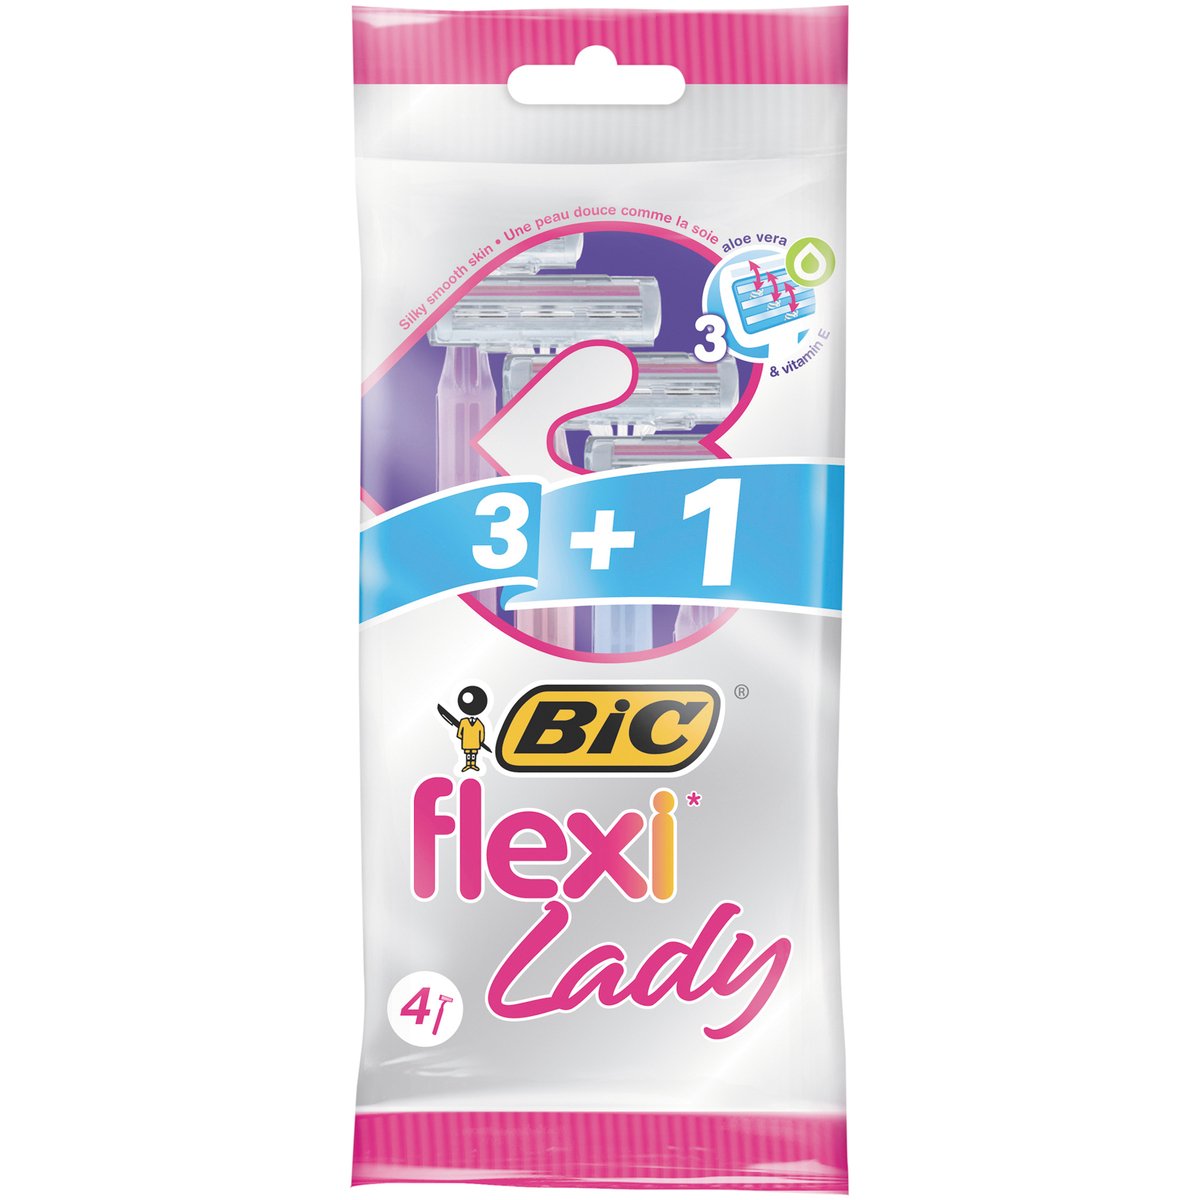 Bic Flexi Lady Disposable Razor 4 pcs